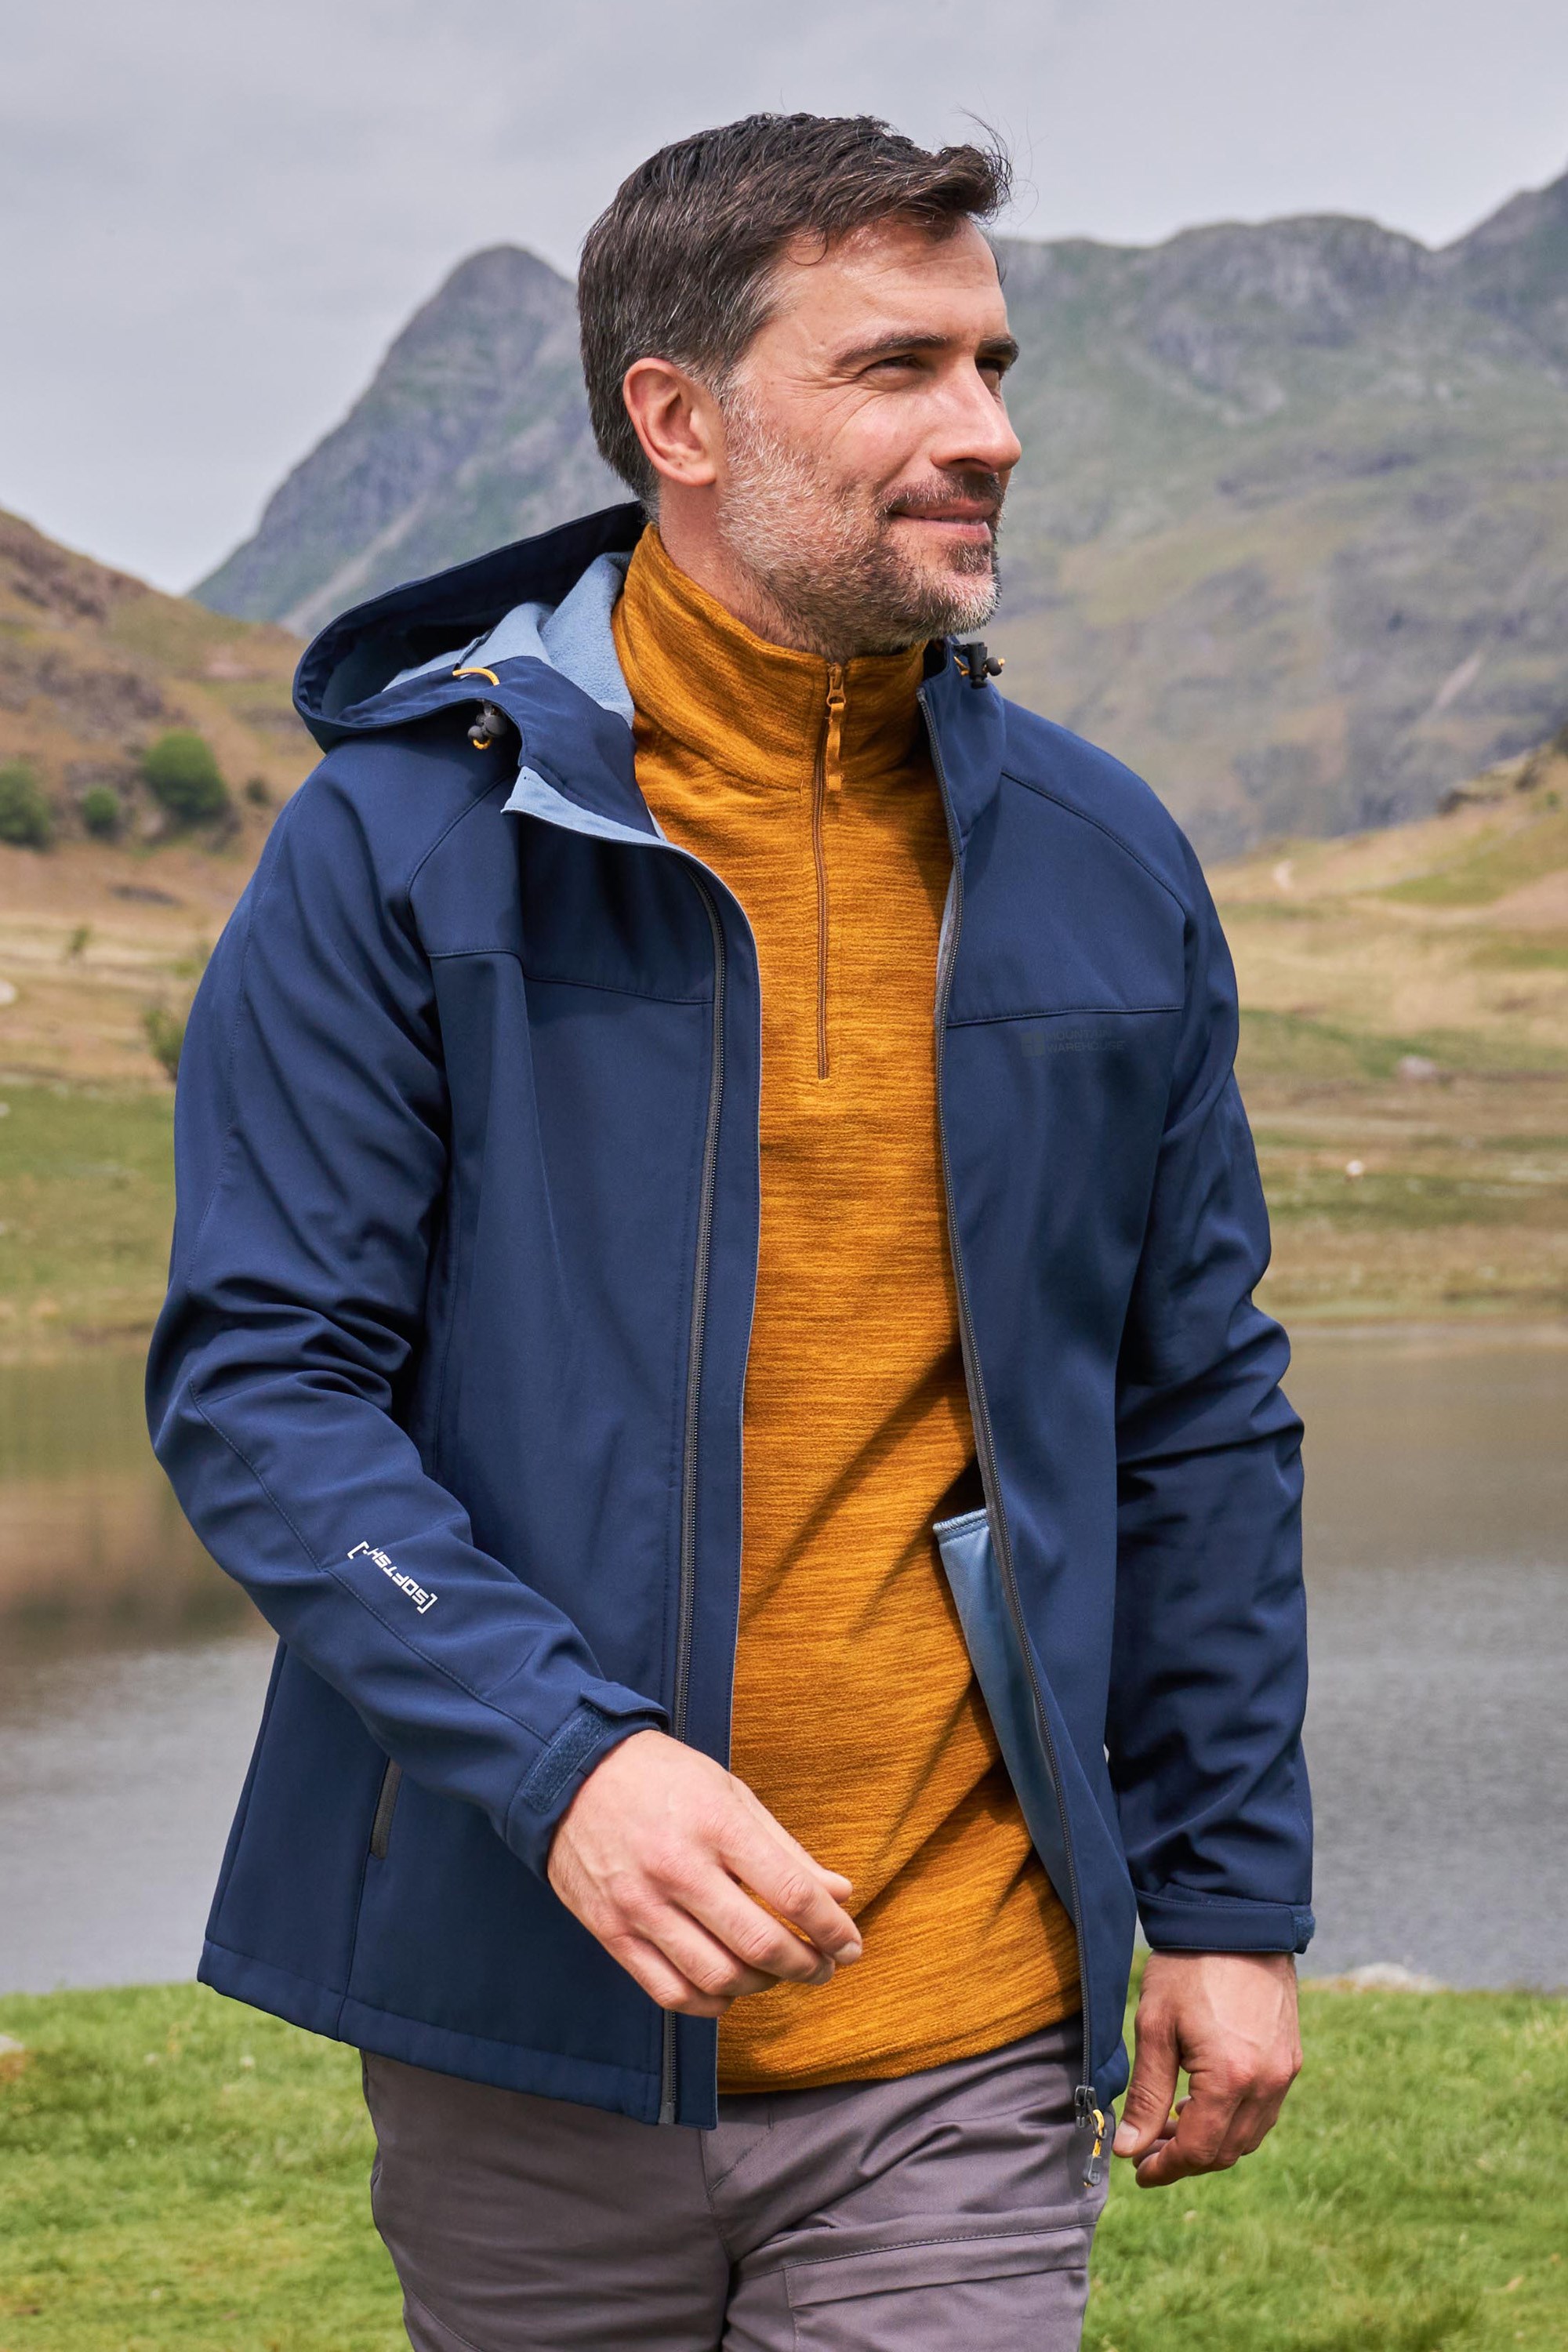 Men's Softshell Jackets, Wind-Resistant Jackets